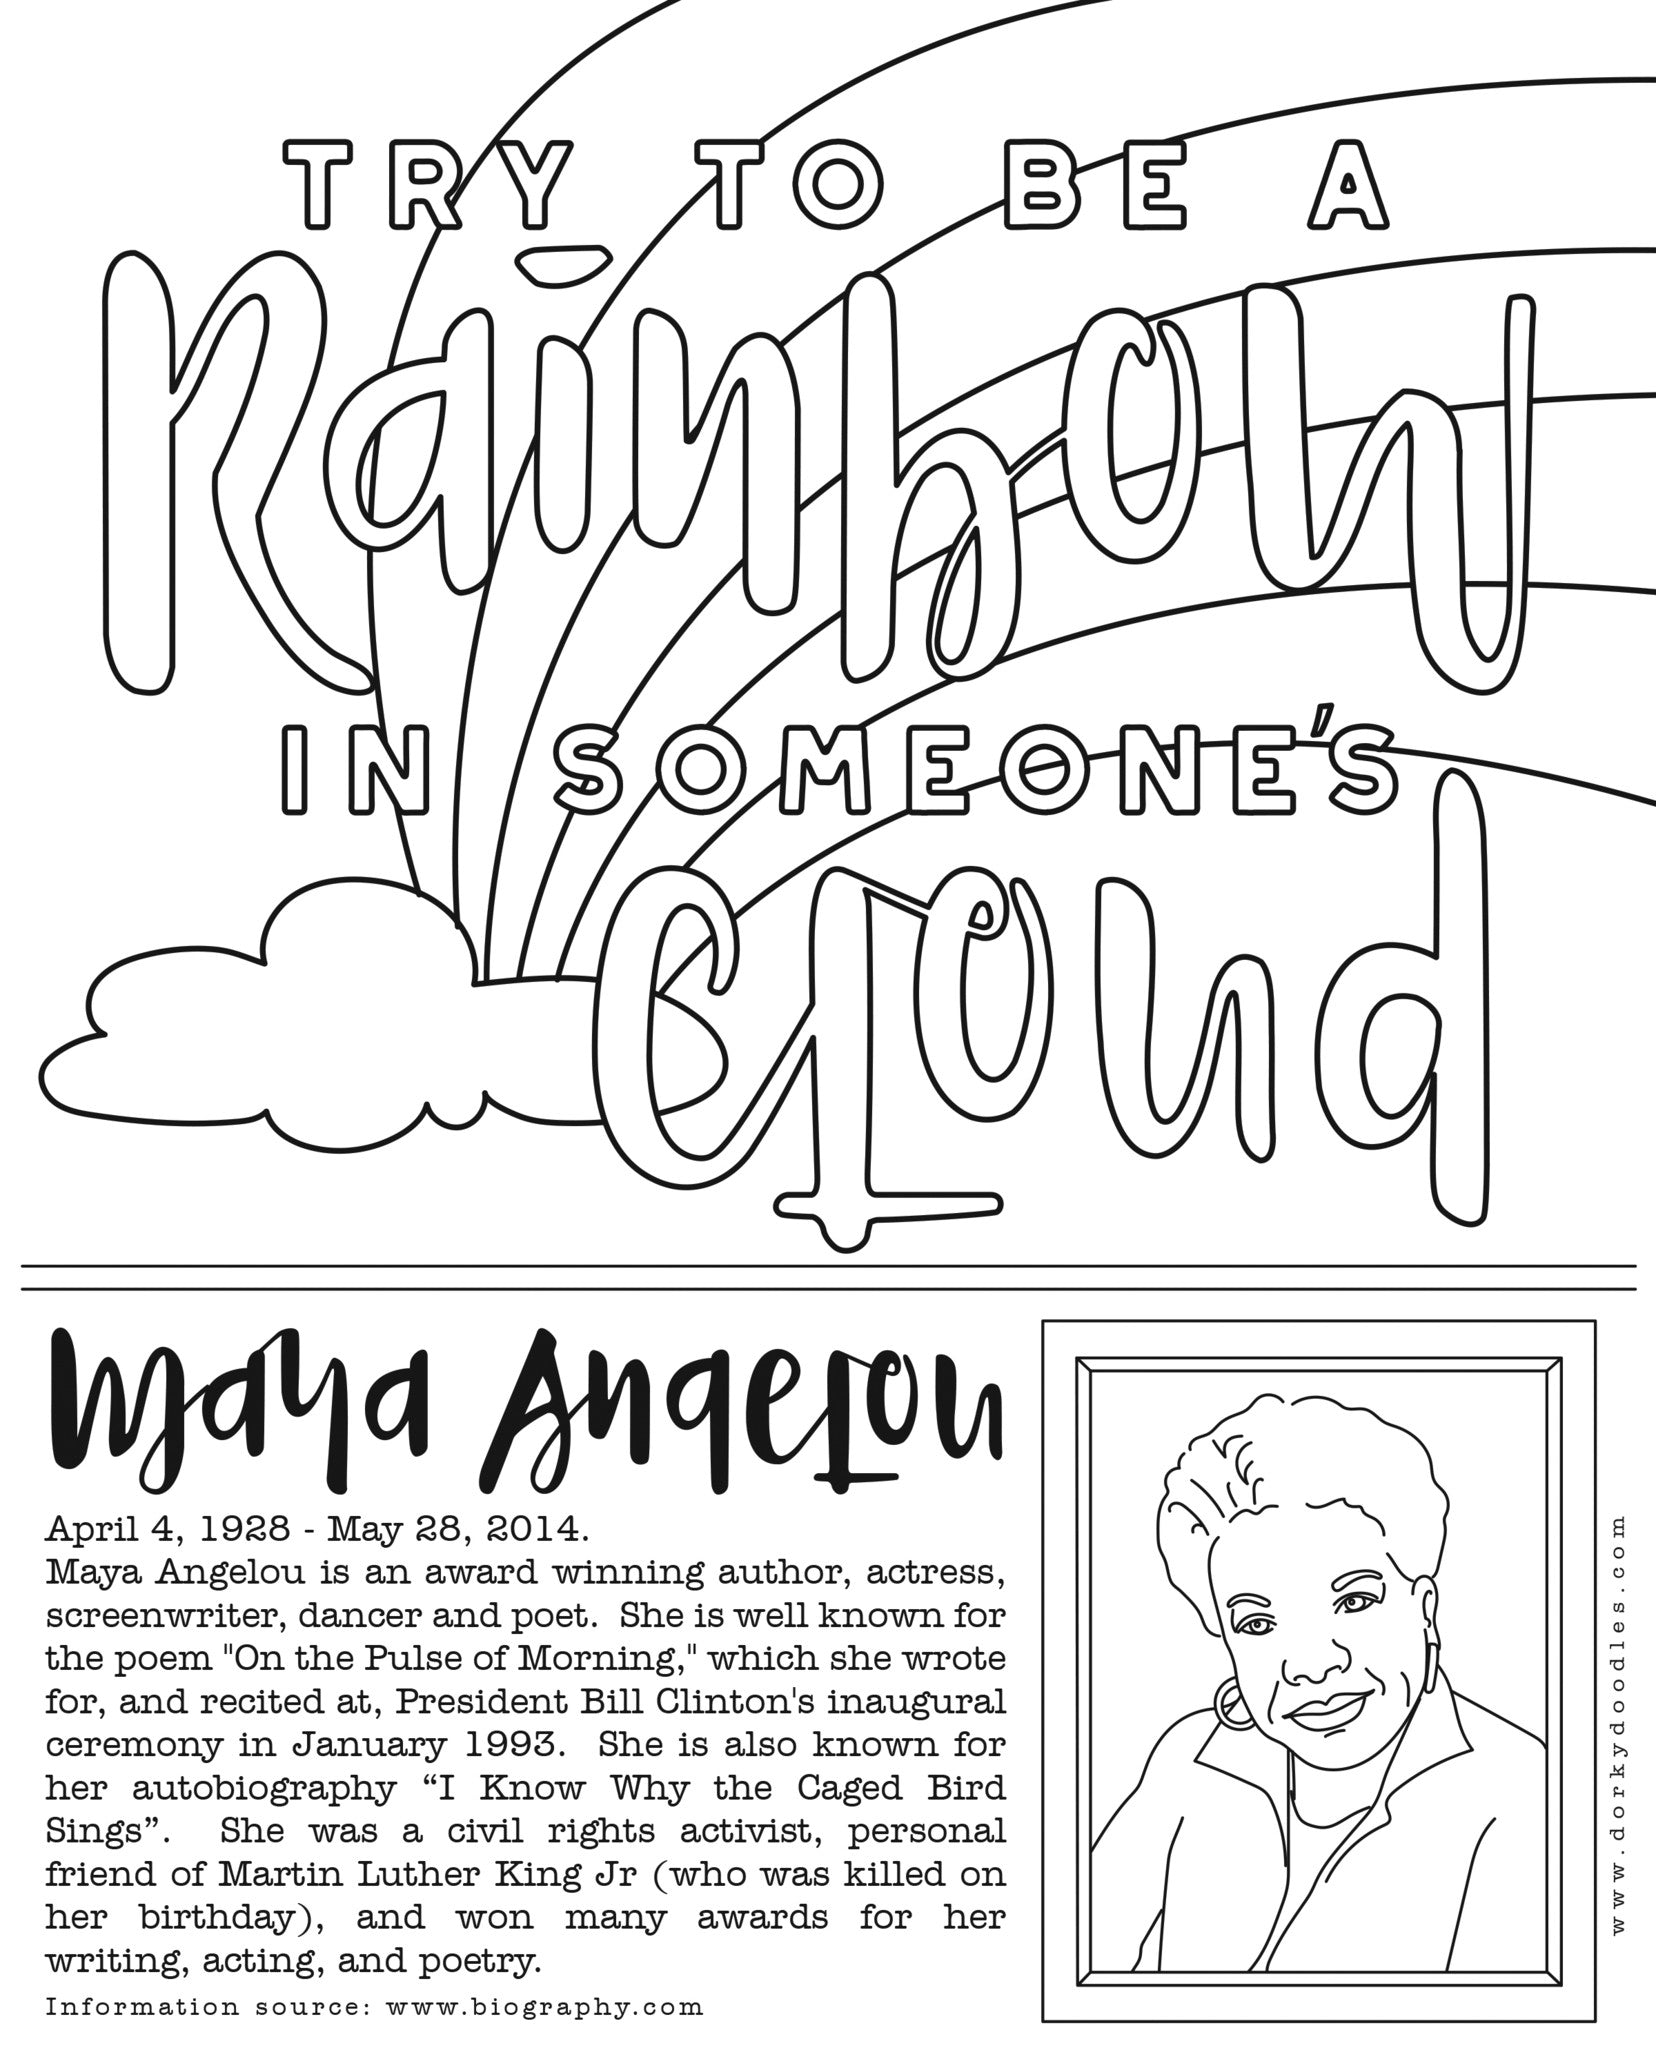 Black History Month Coloring Page: Maya Angelou – Dorky Doodles